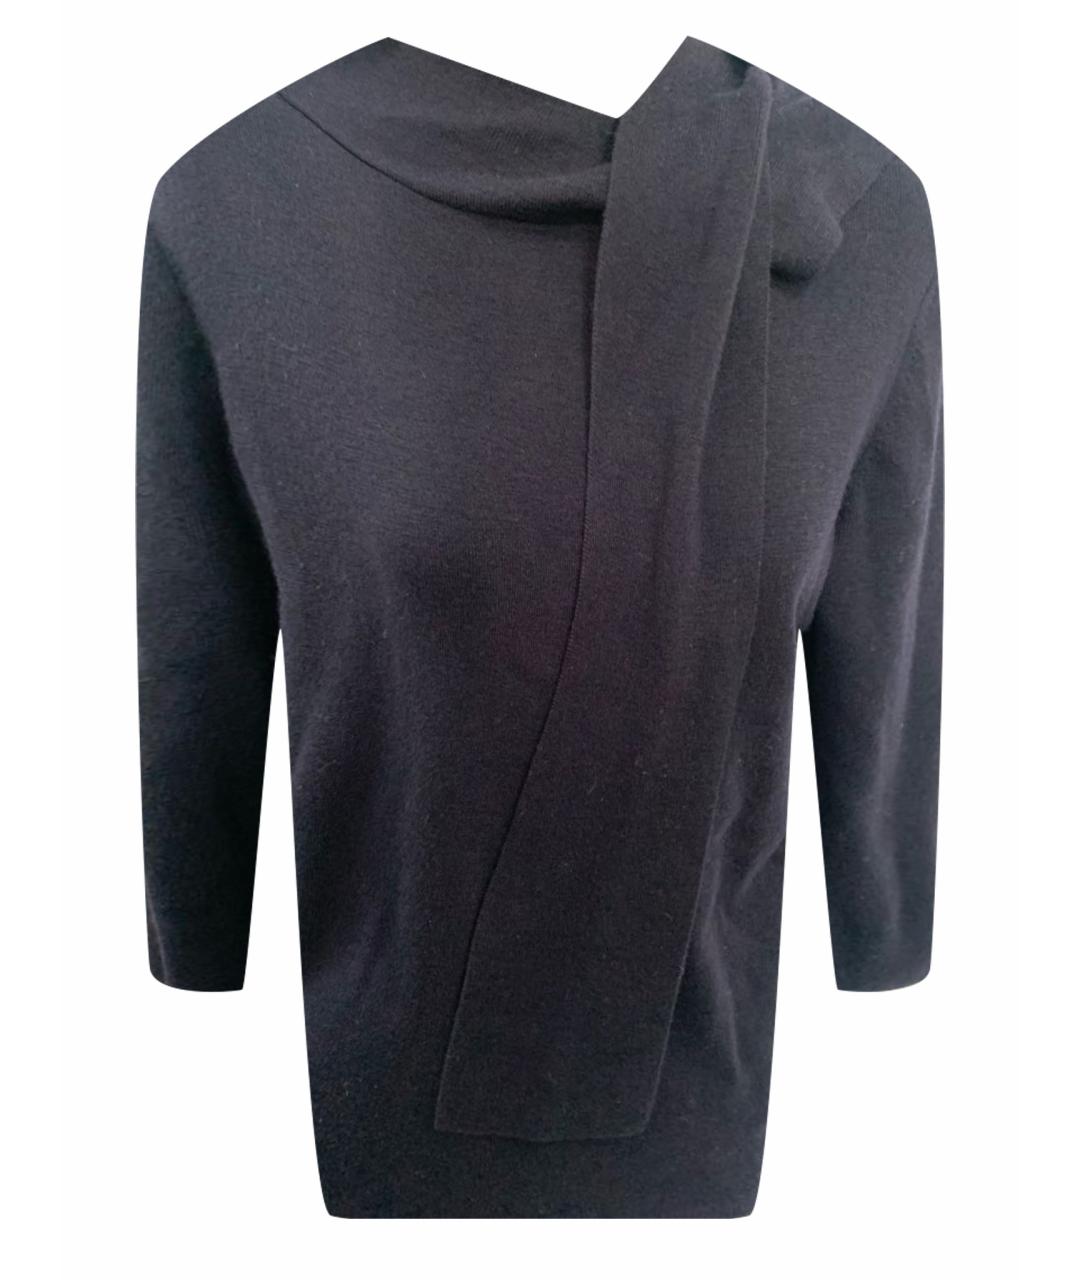 COS Темно-синий шерстяной джемпер / свитер, фото 1